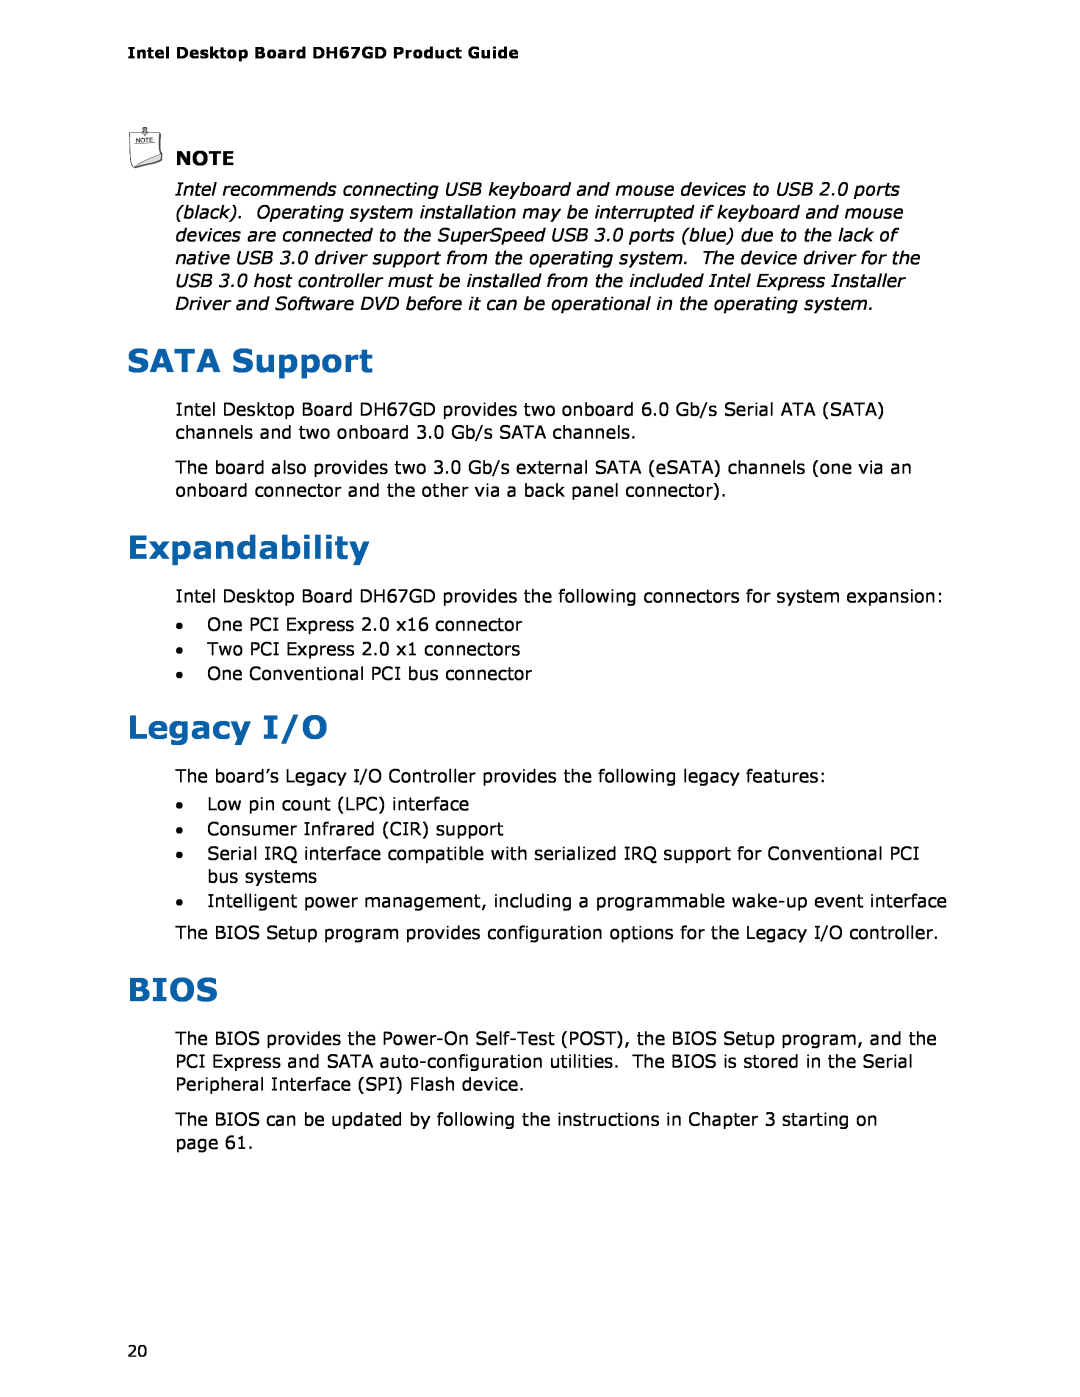 Intel G13841-001, BLKDH67GDB3 manual SATA Support, Expandability, Legacy I/O, Bios 